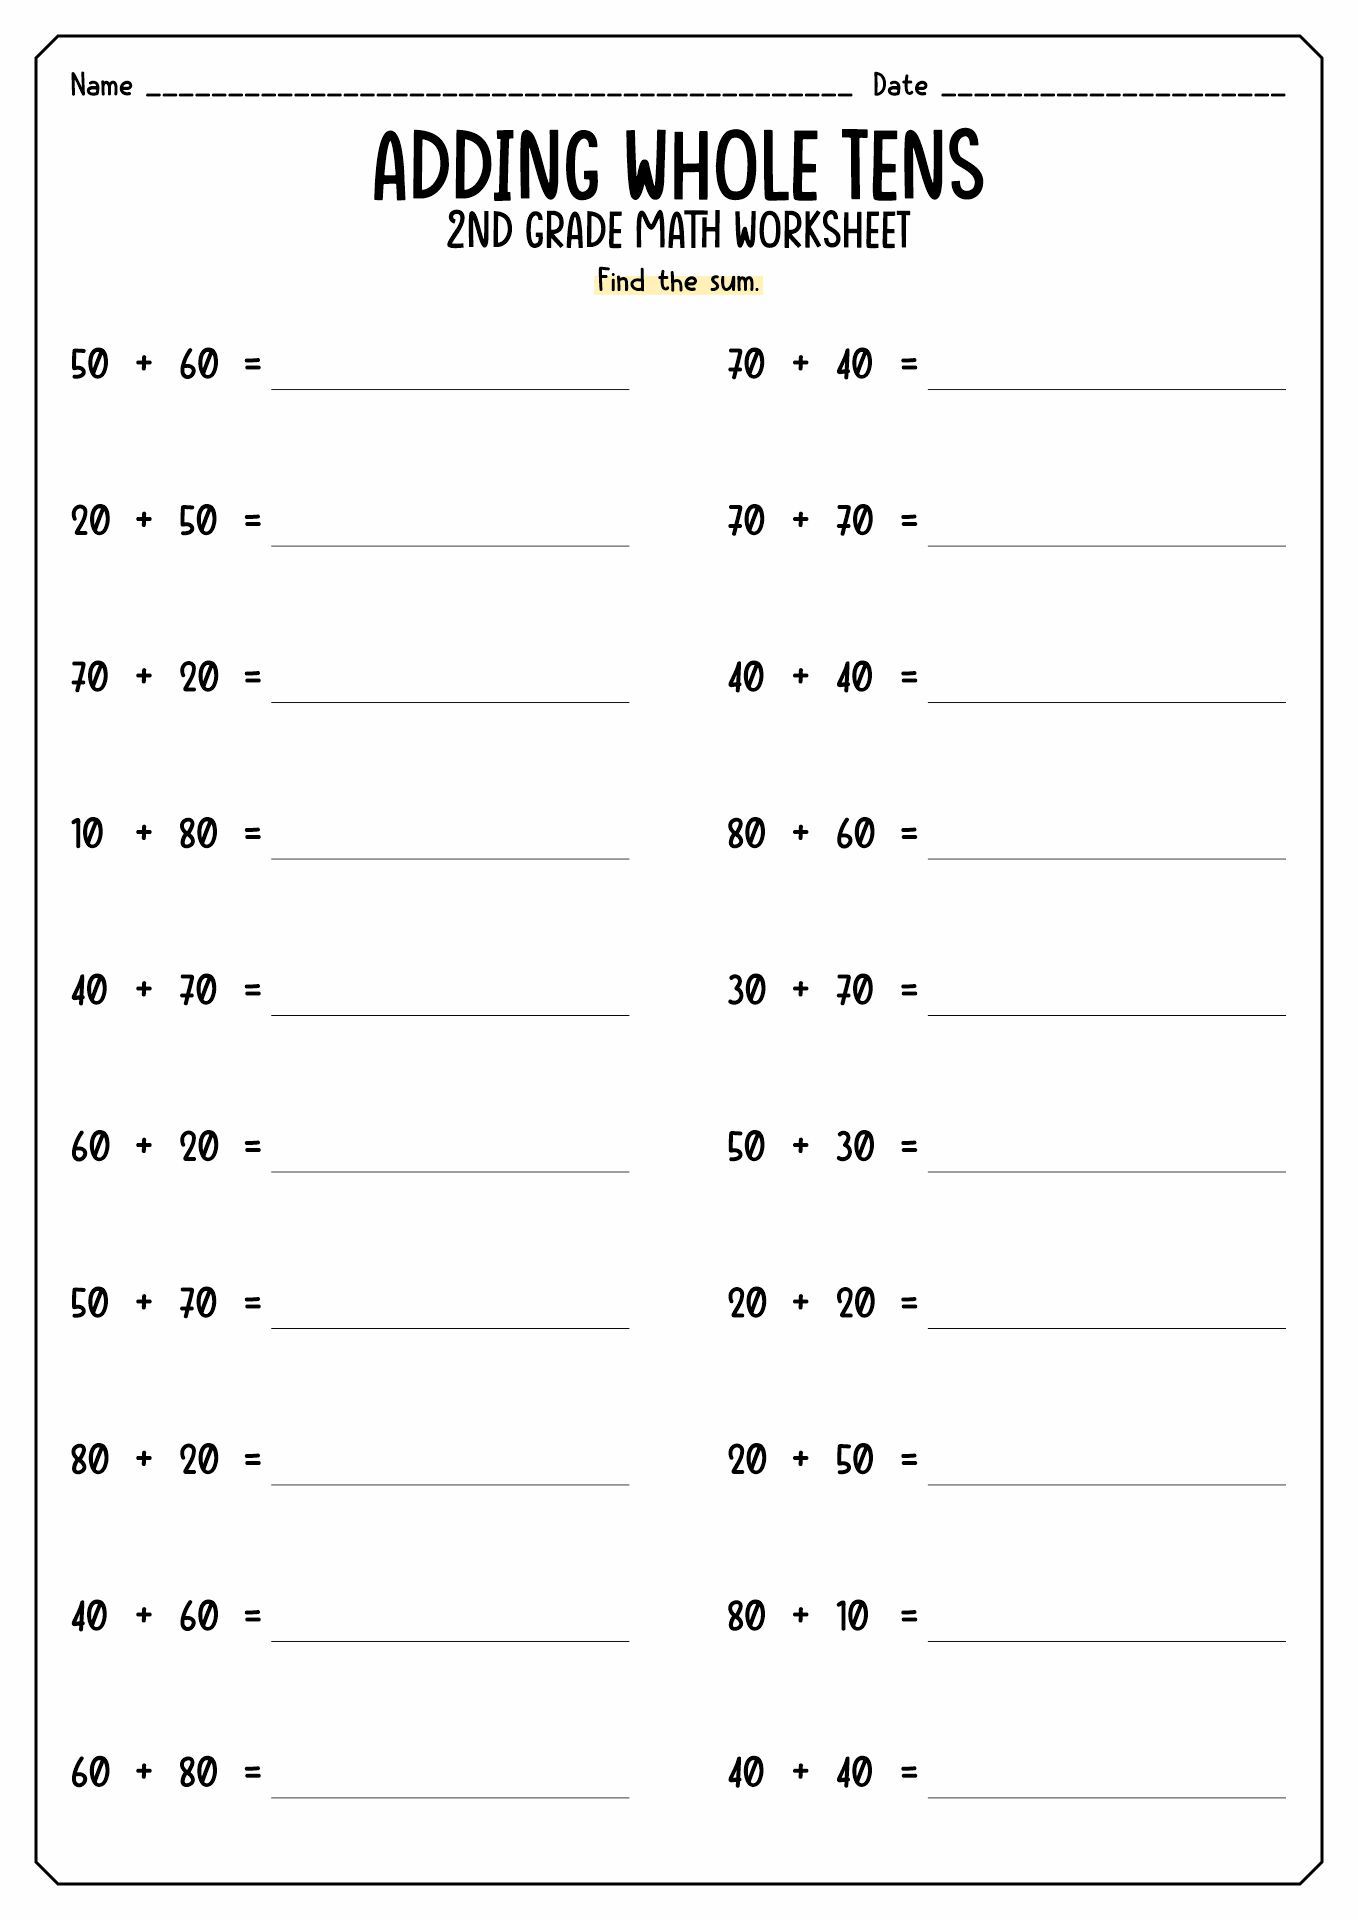 2nd Grade Math Worksheets PDF Image